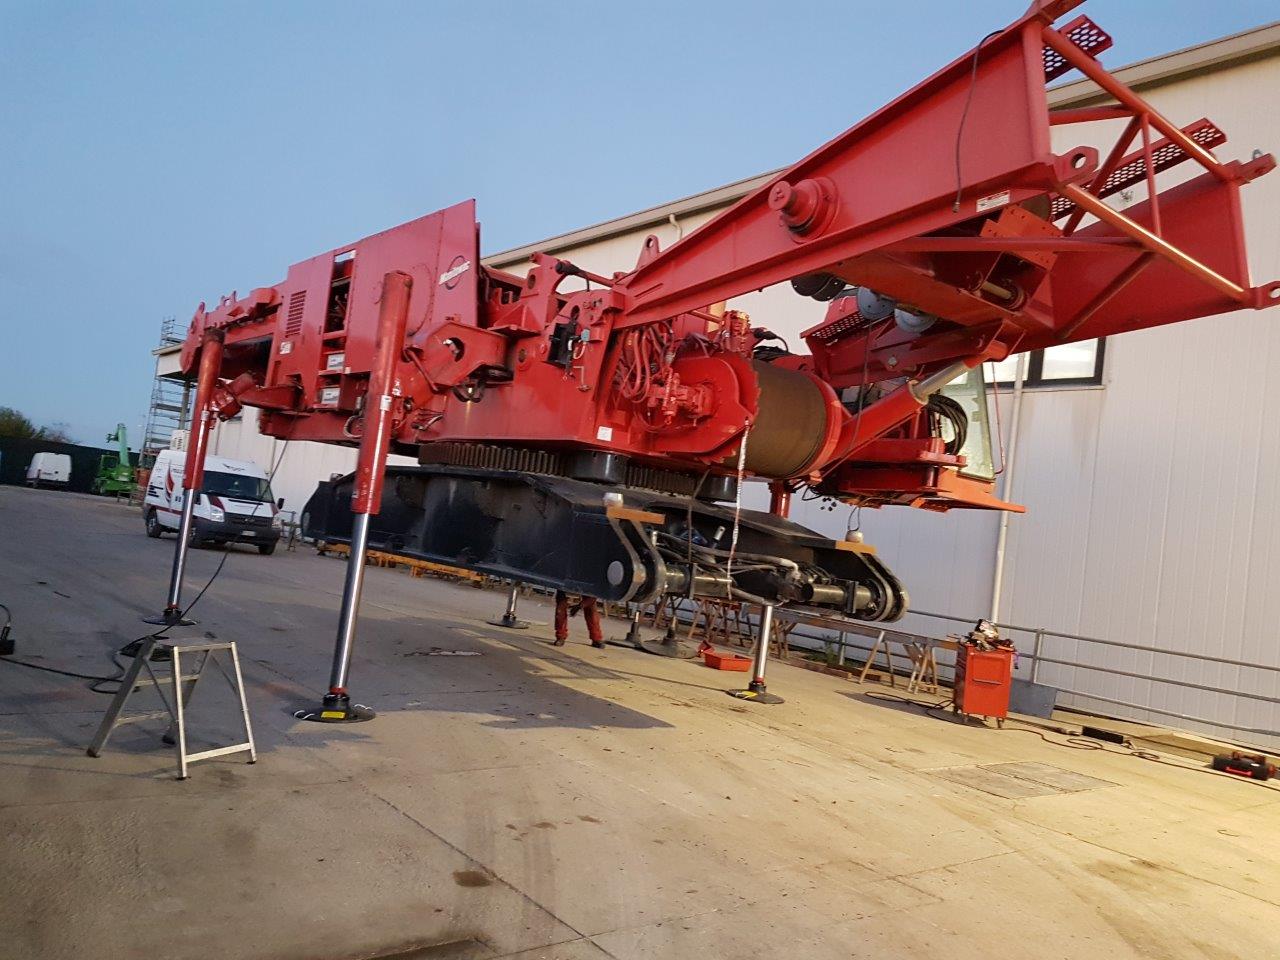 Danieli Construction S Manitowoc 2250 Lattice Boom Crane Unloads